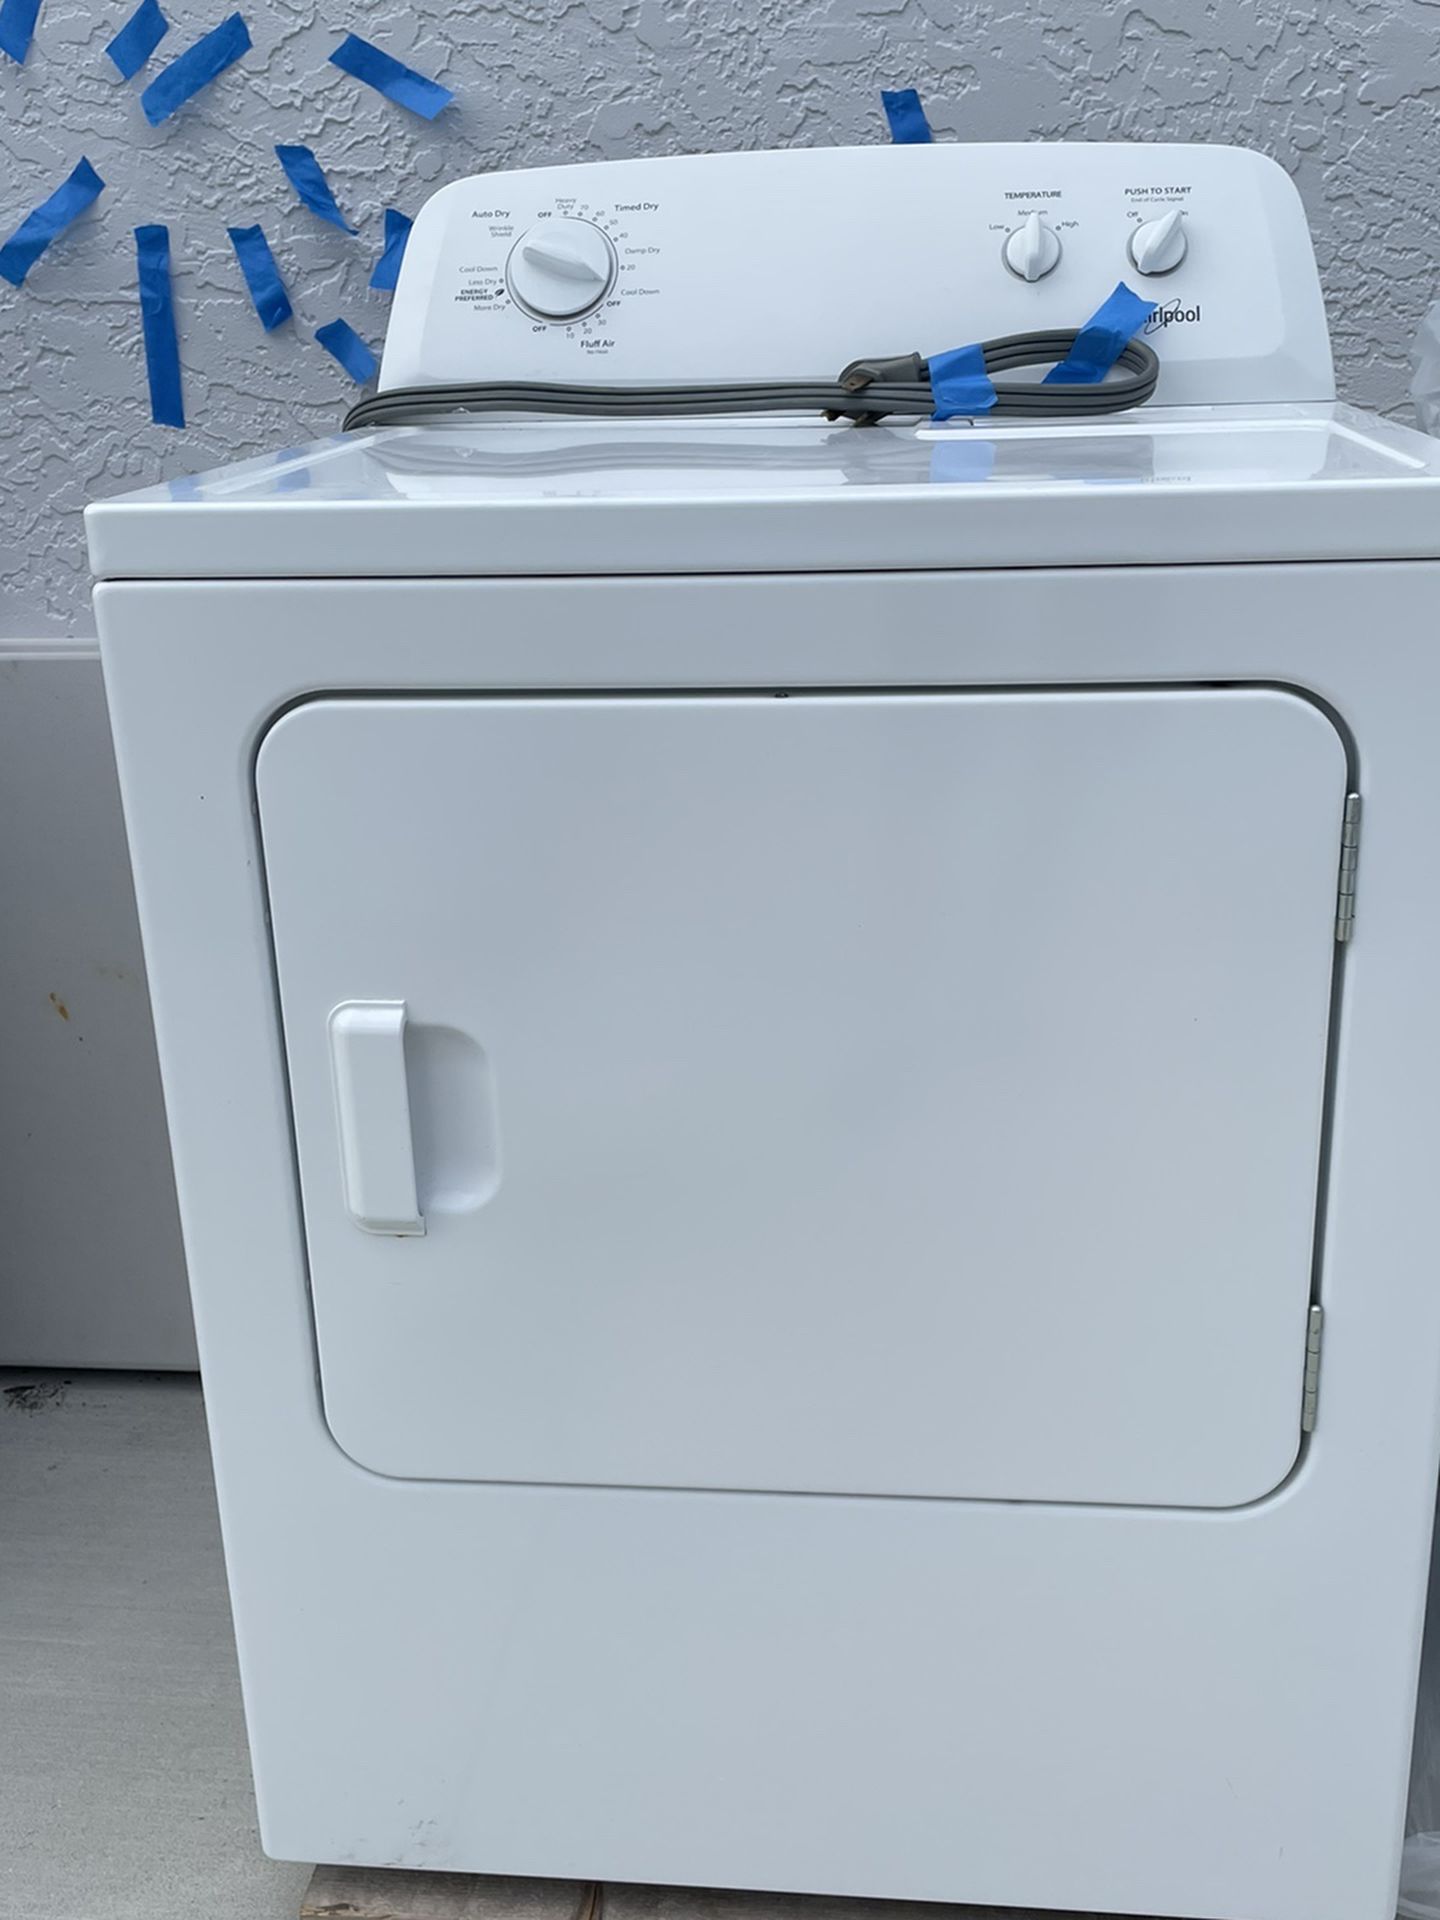 whirlpool Dryer